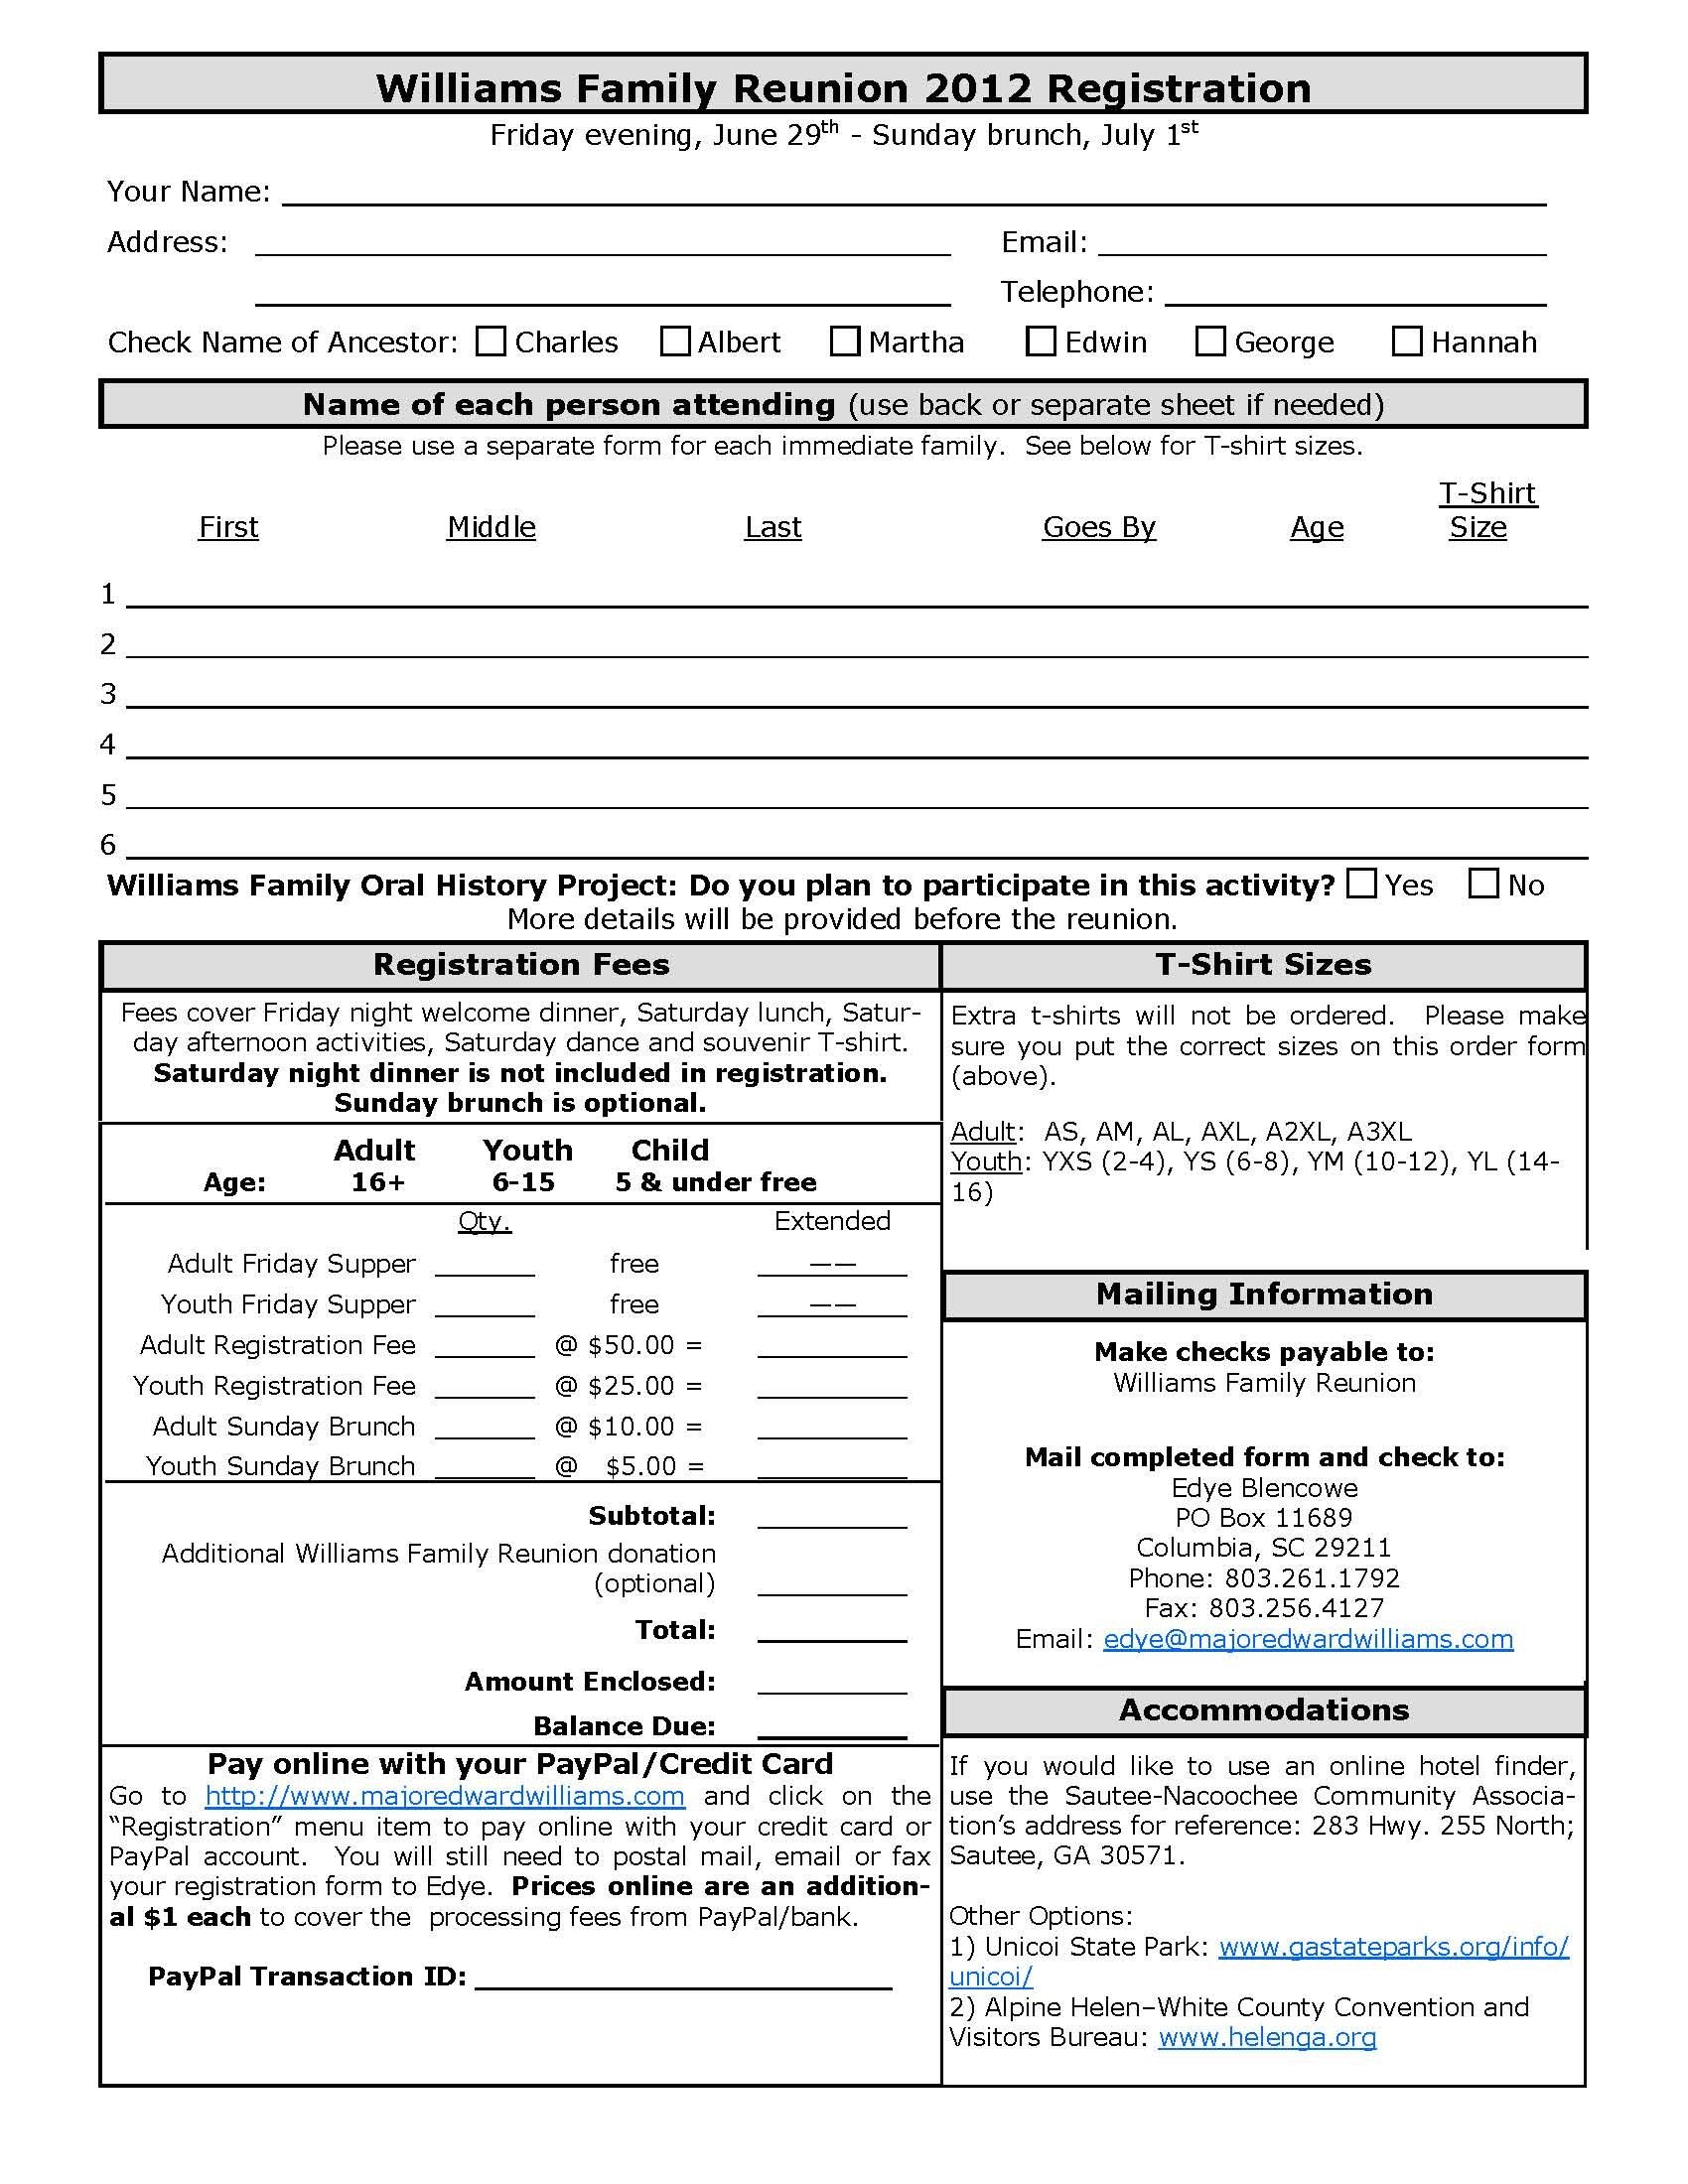 Registration Form Example | Reunion Registration | Family Reunion - Free Printable Membership Forms